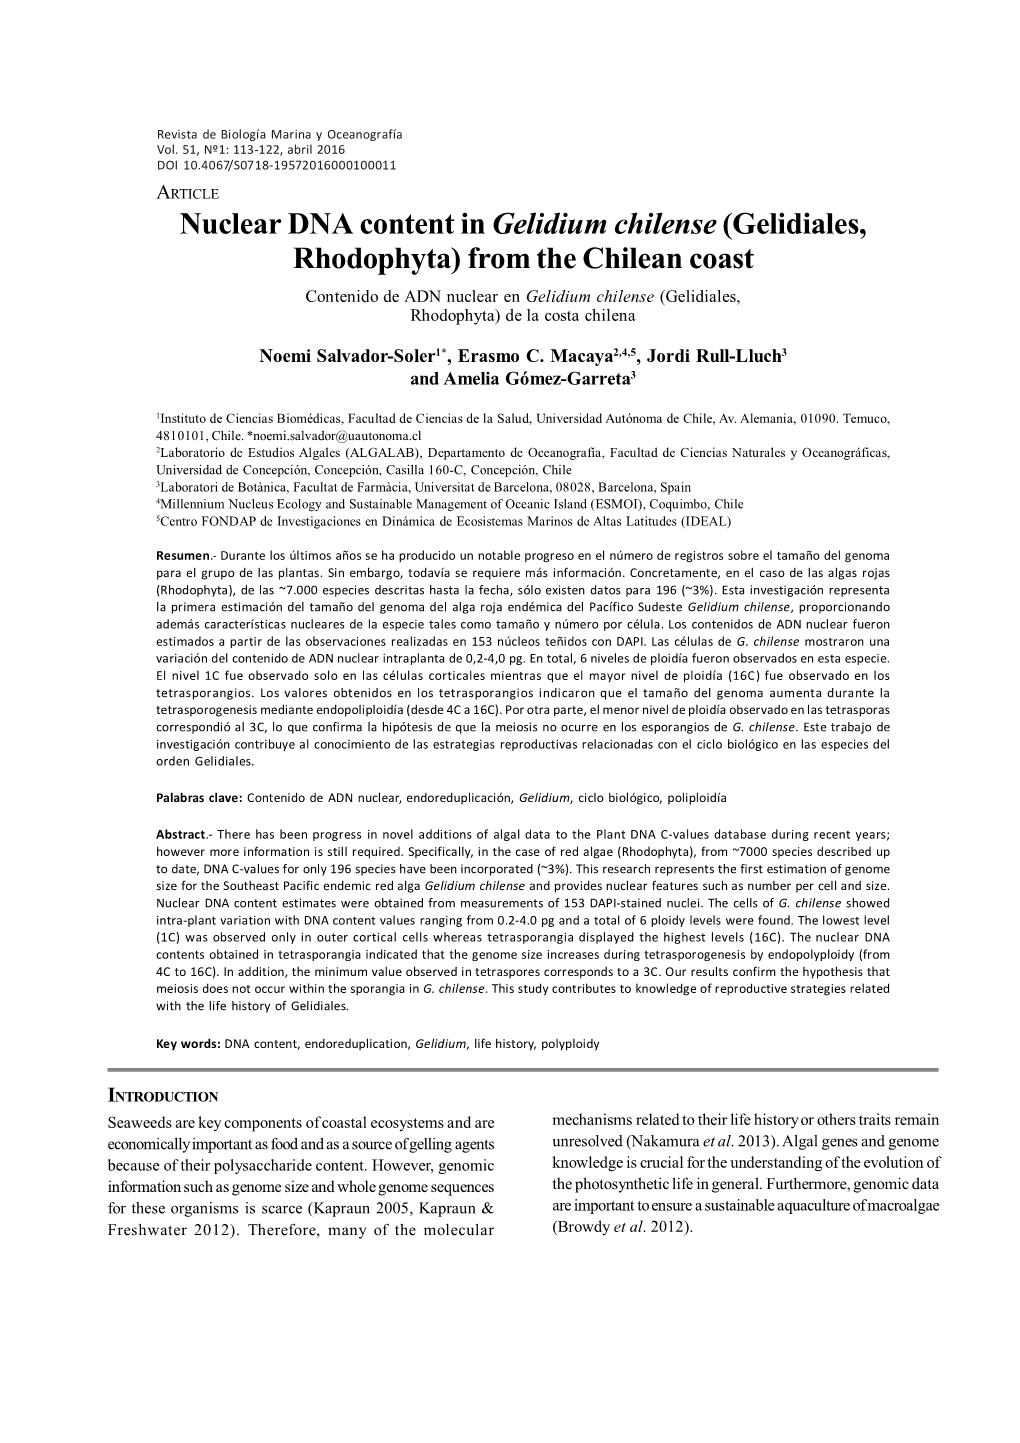 Nuclear DNA Content in Gelidium Chilense (Gelidiales, Rhodophyta